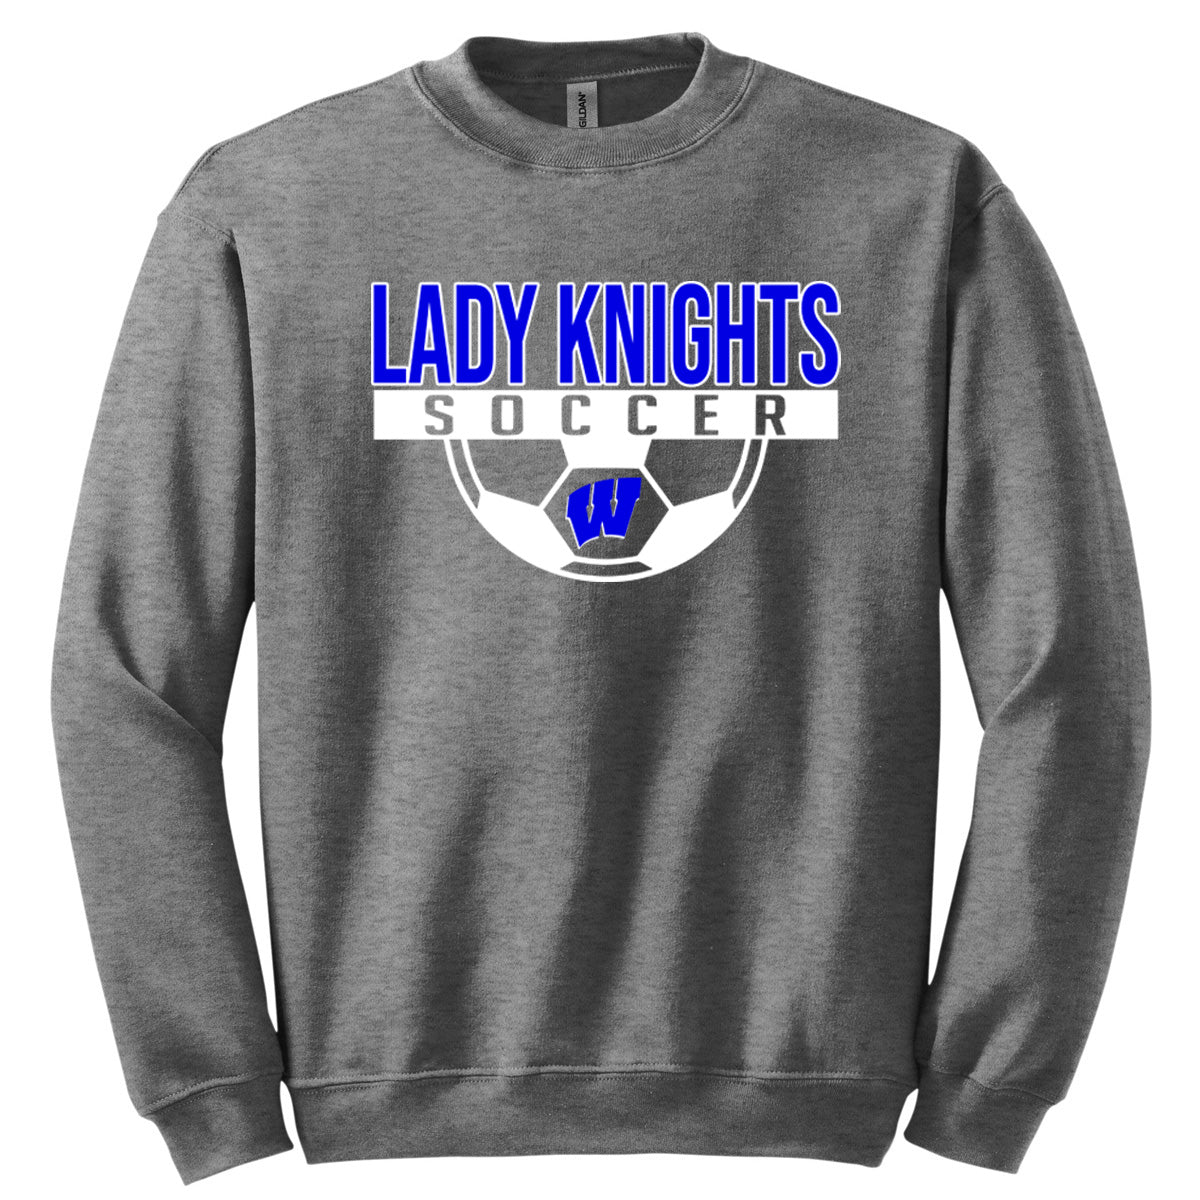 Windsor - Lady Knights Soccer (Half Ball) - Grey Concrete (Tee/DriFit/Hoodie/Sweatshirt) - Southern Grace Creations